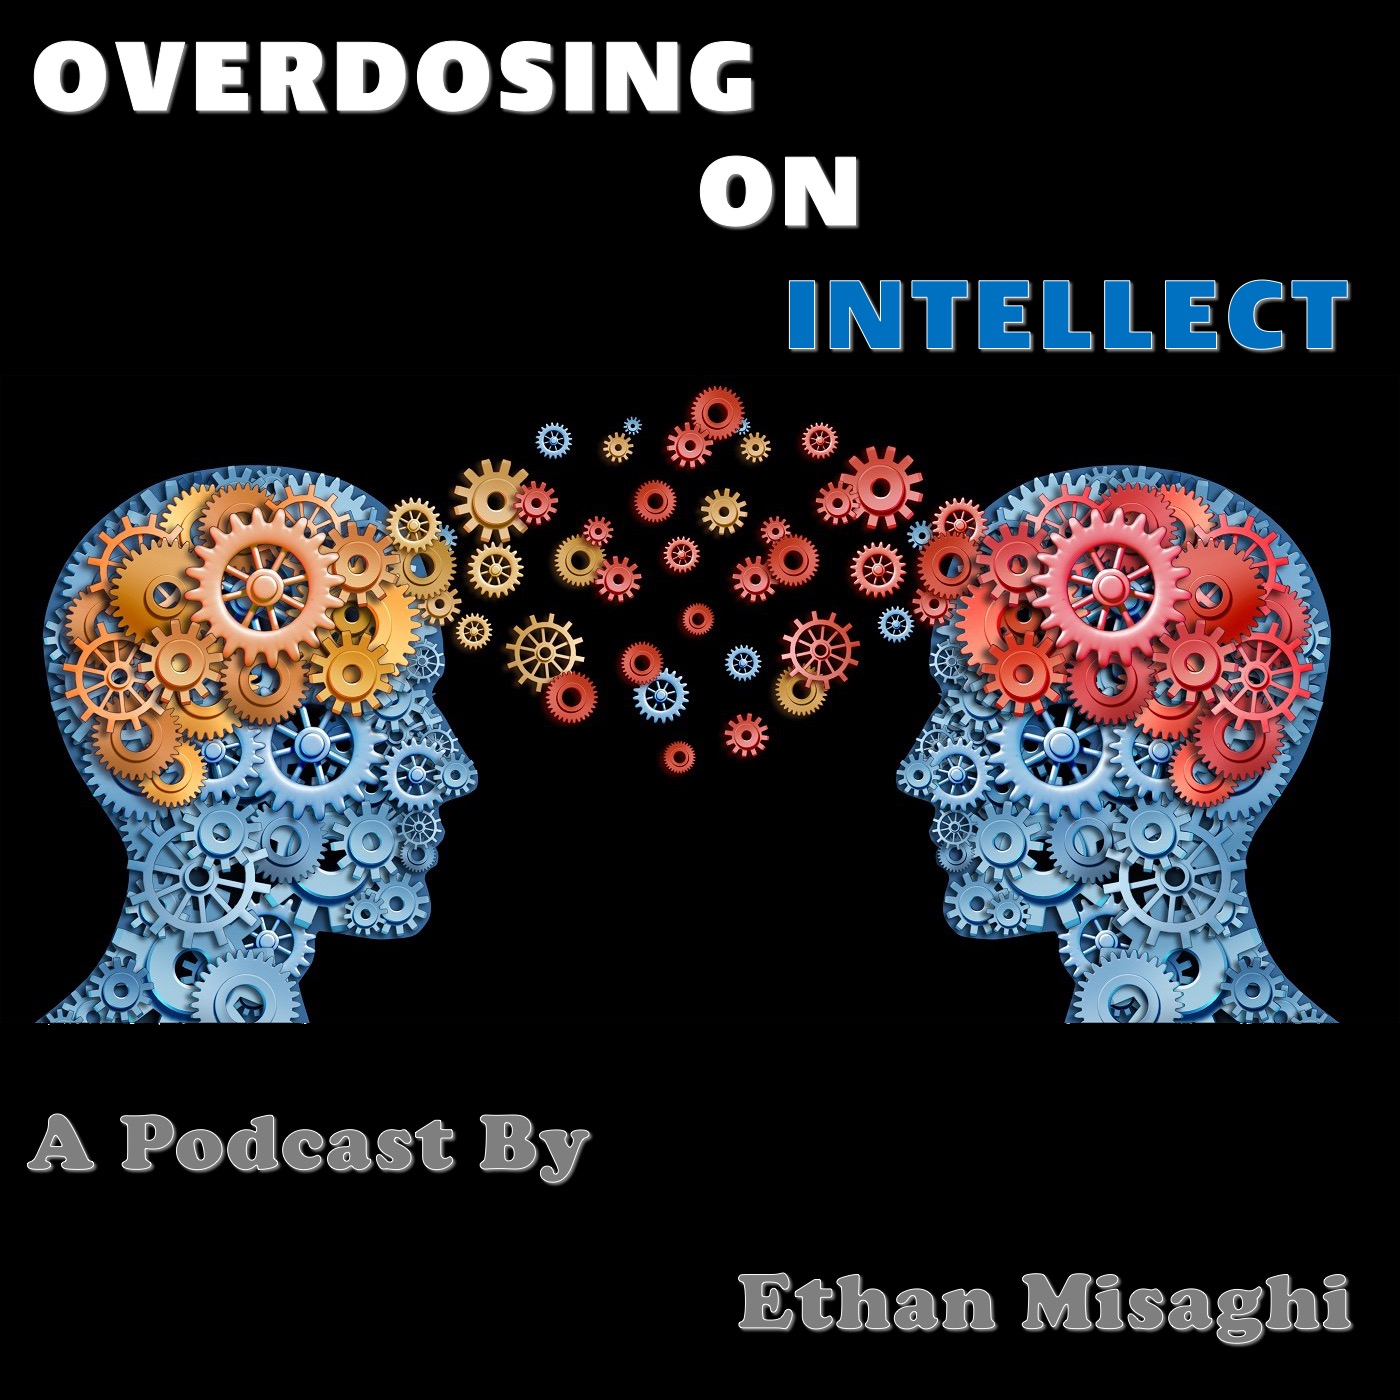 Overdosing on Intellect